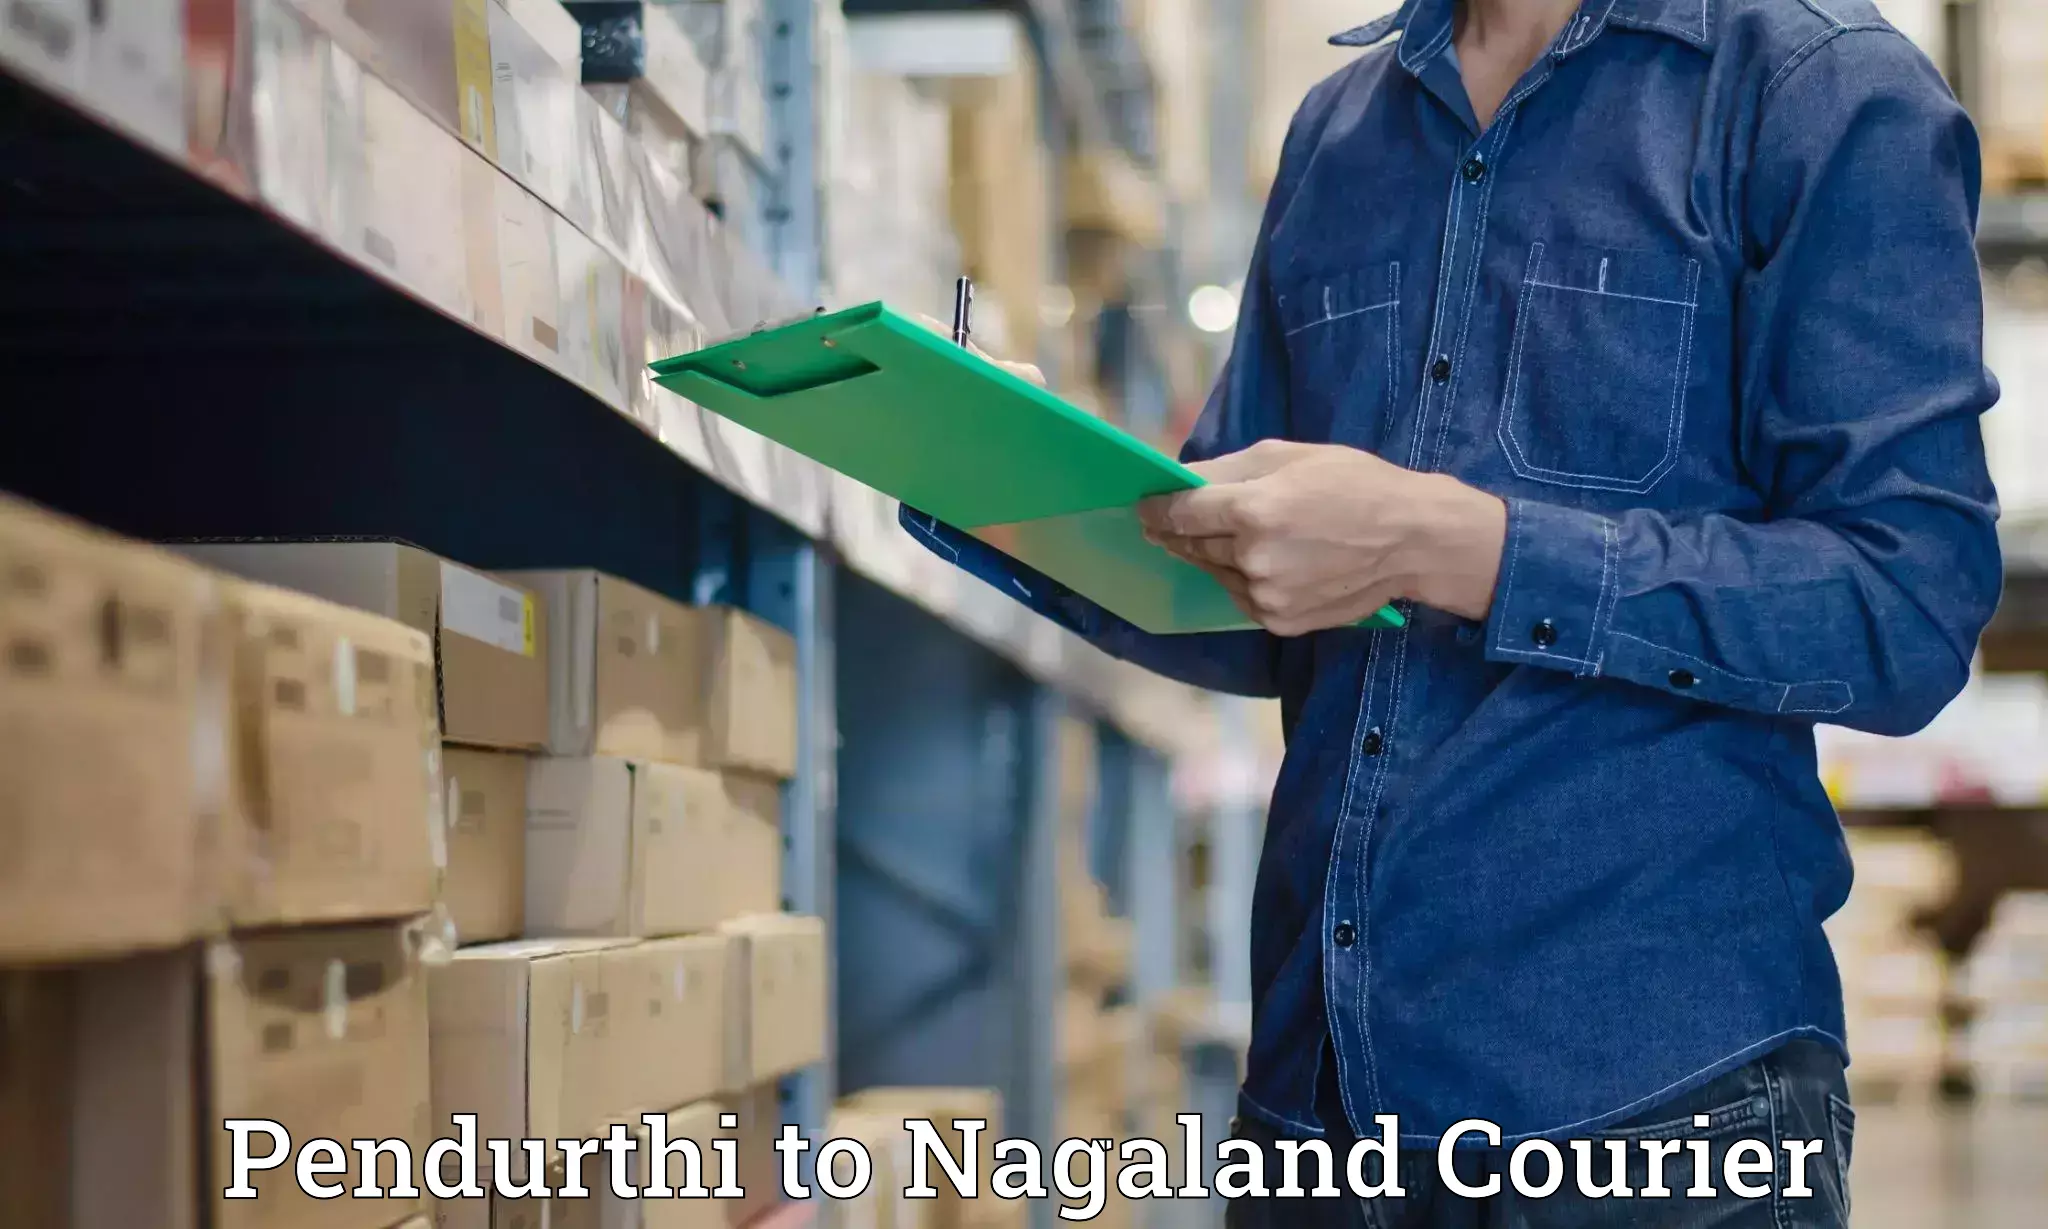 Nationwide parcel services Pendurthi to Nagaland